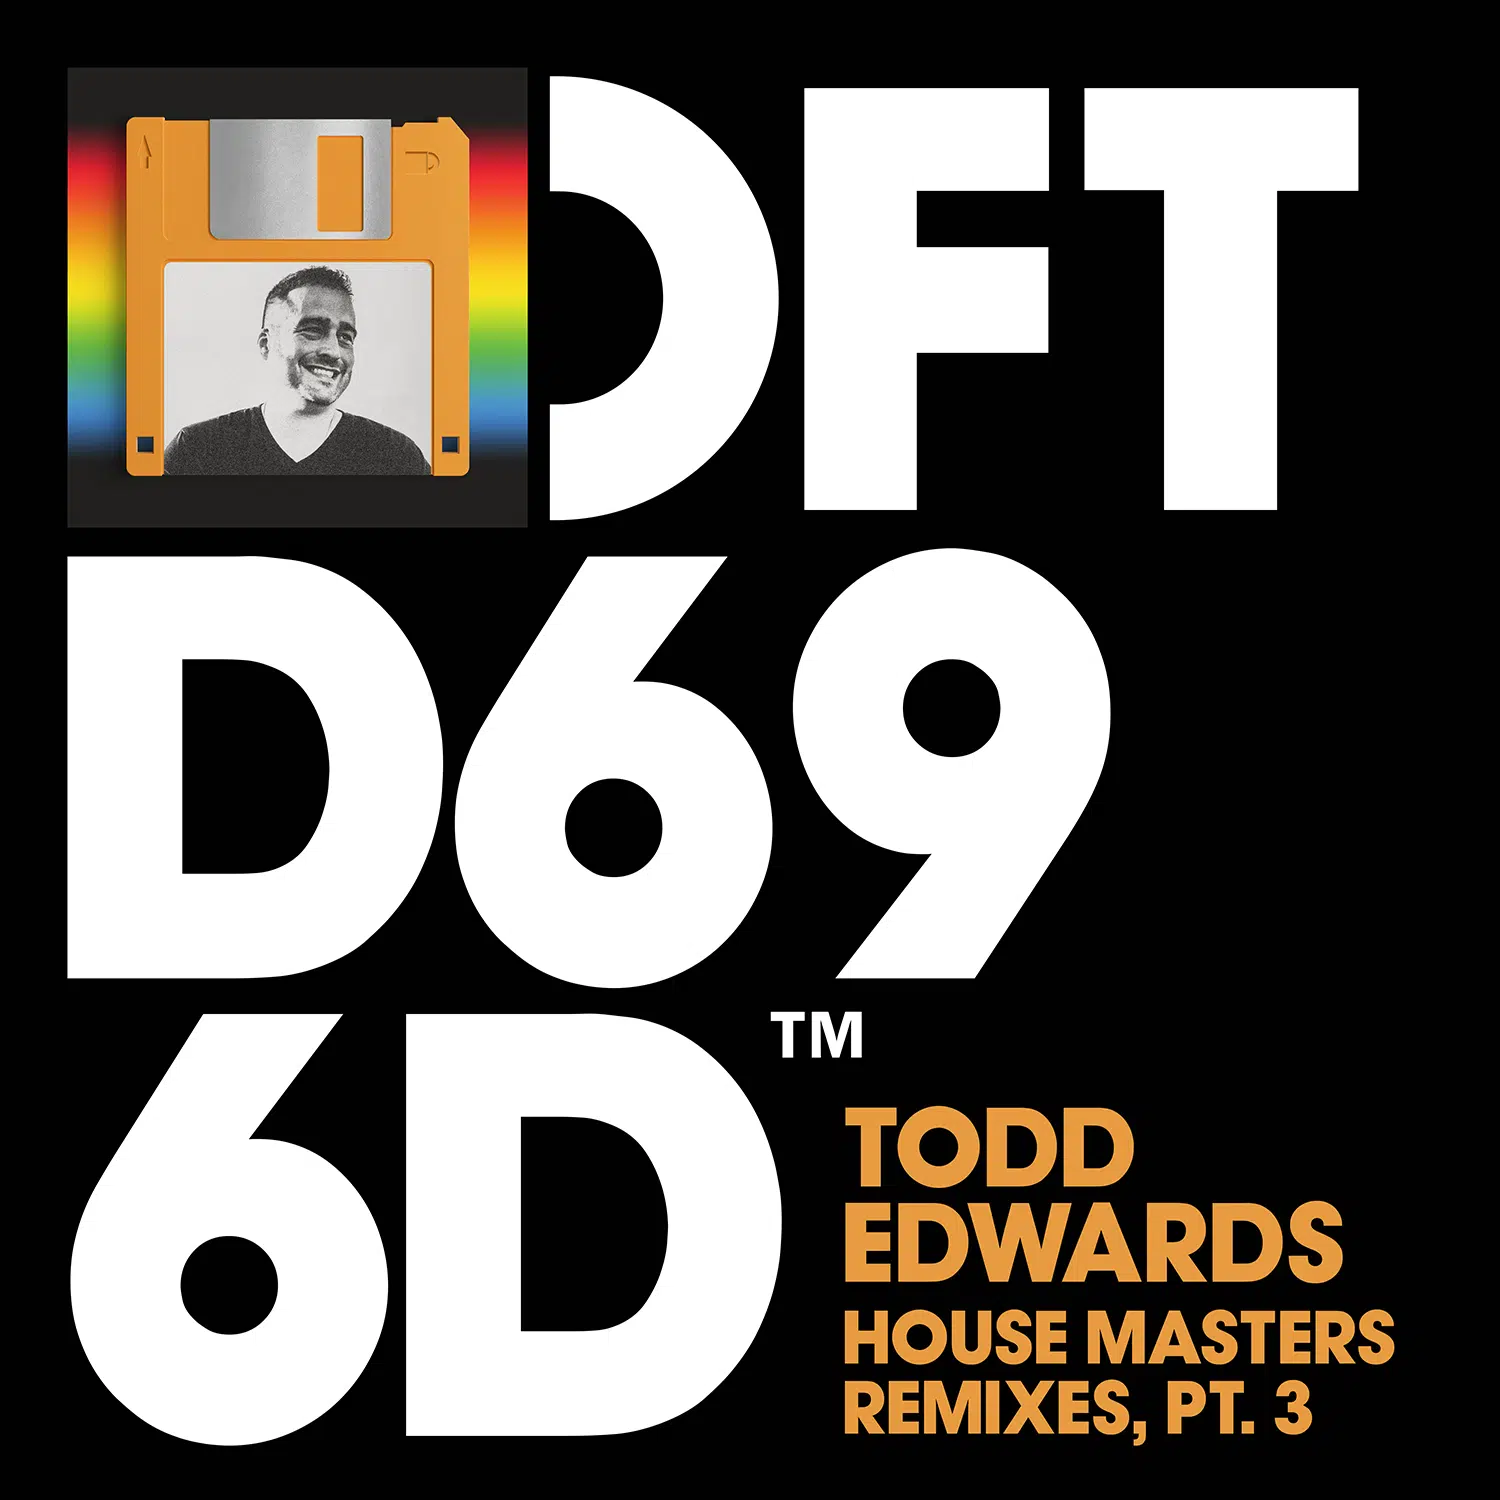 Todd Edwards “House Masters” LP Giobbi / Biscits / DJ Q Remixes